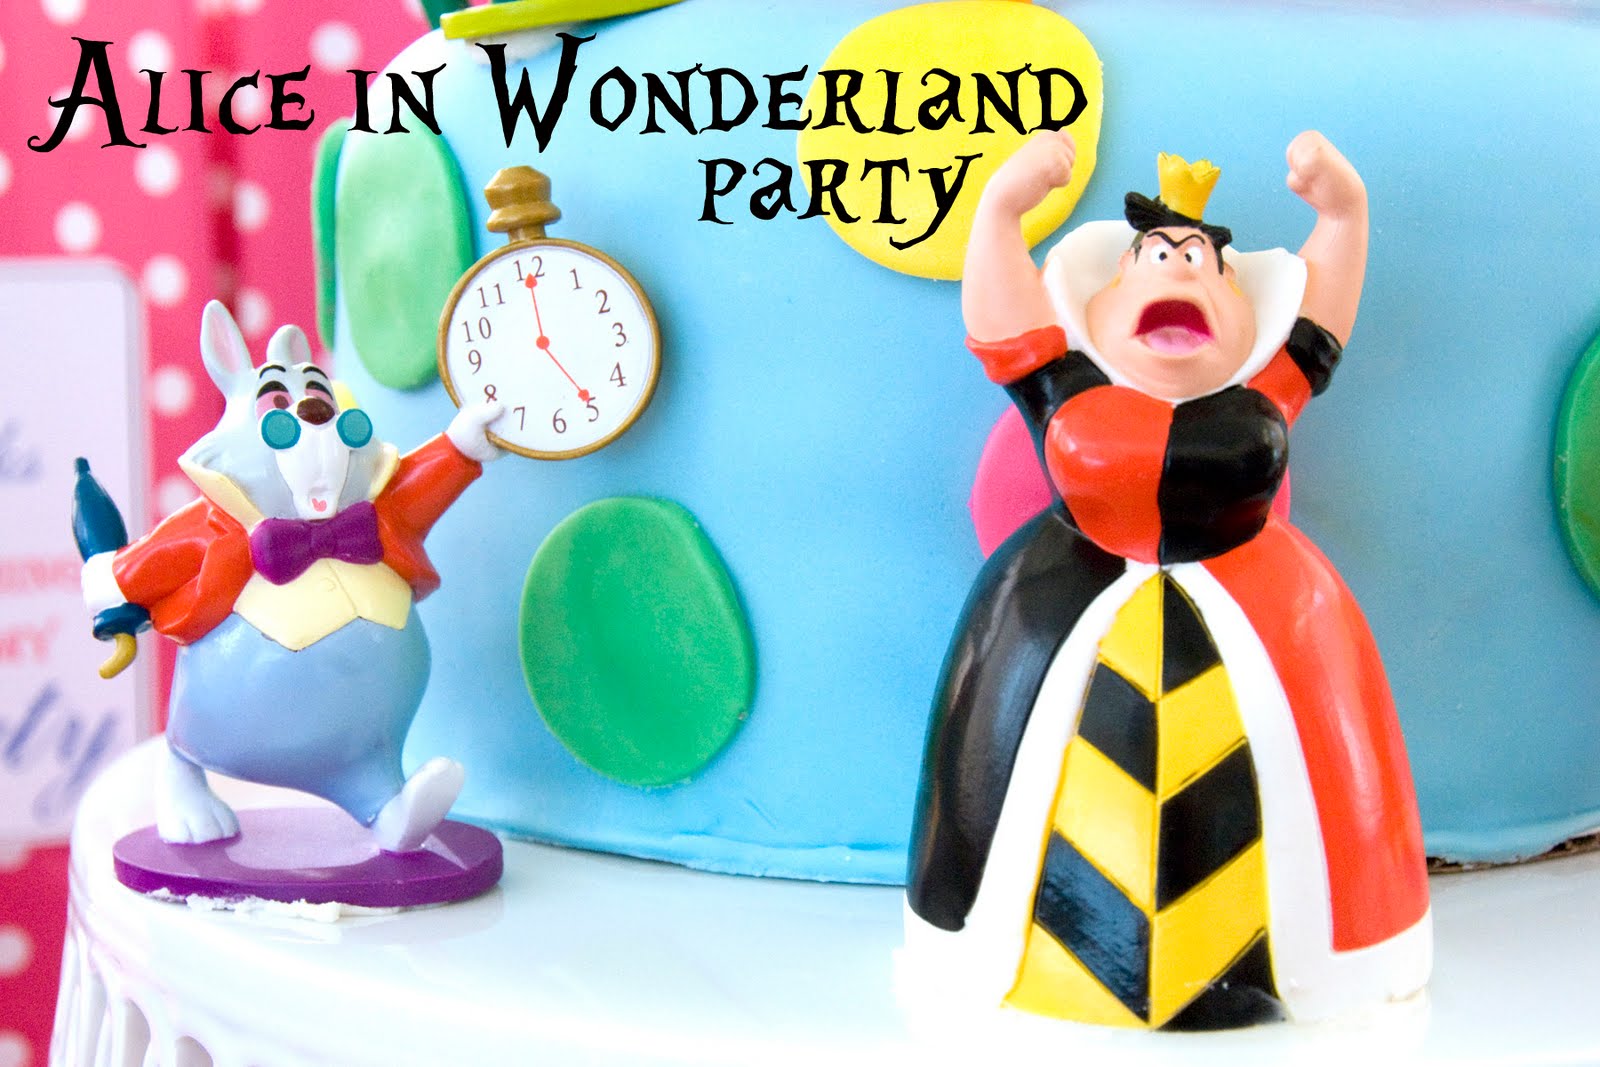 Alice in wonderland - Party Decoration Ideas